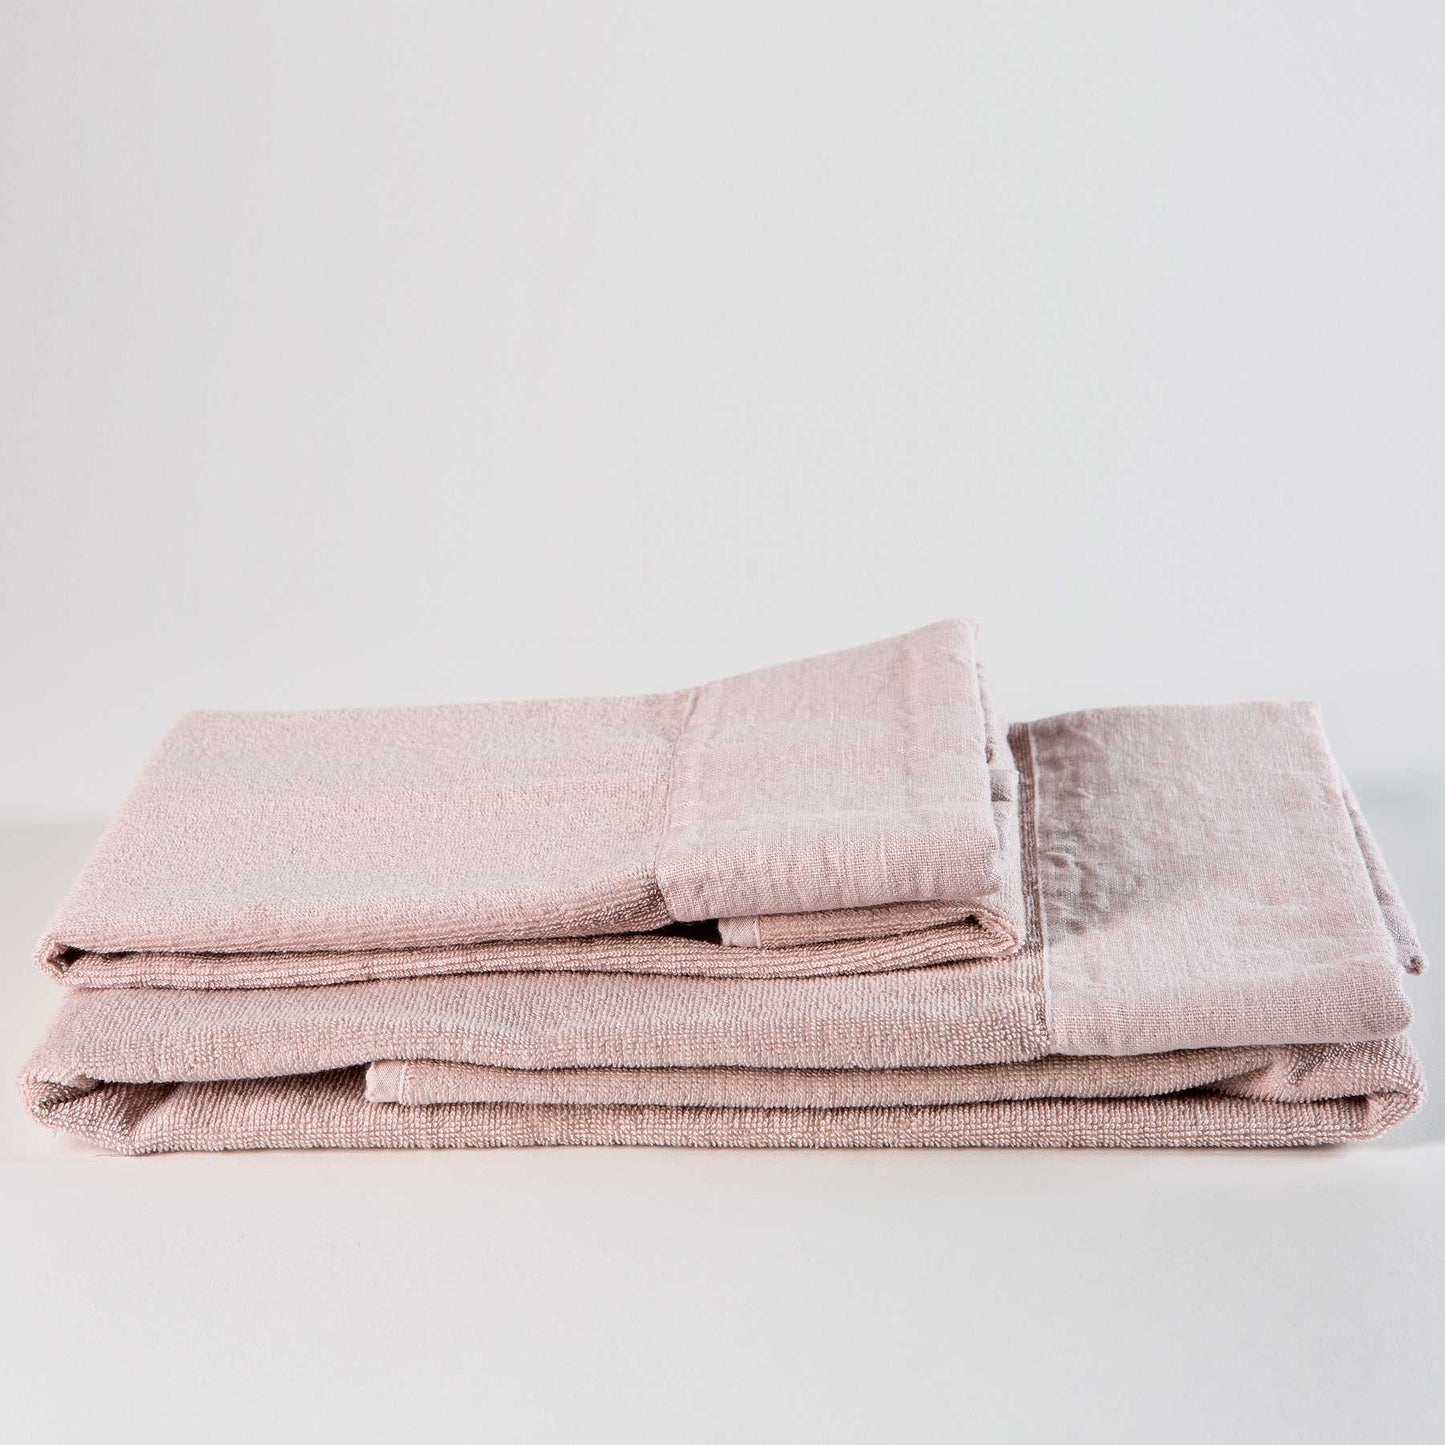 Terry bath towel set with linen edges